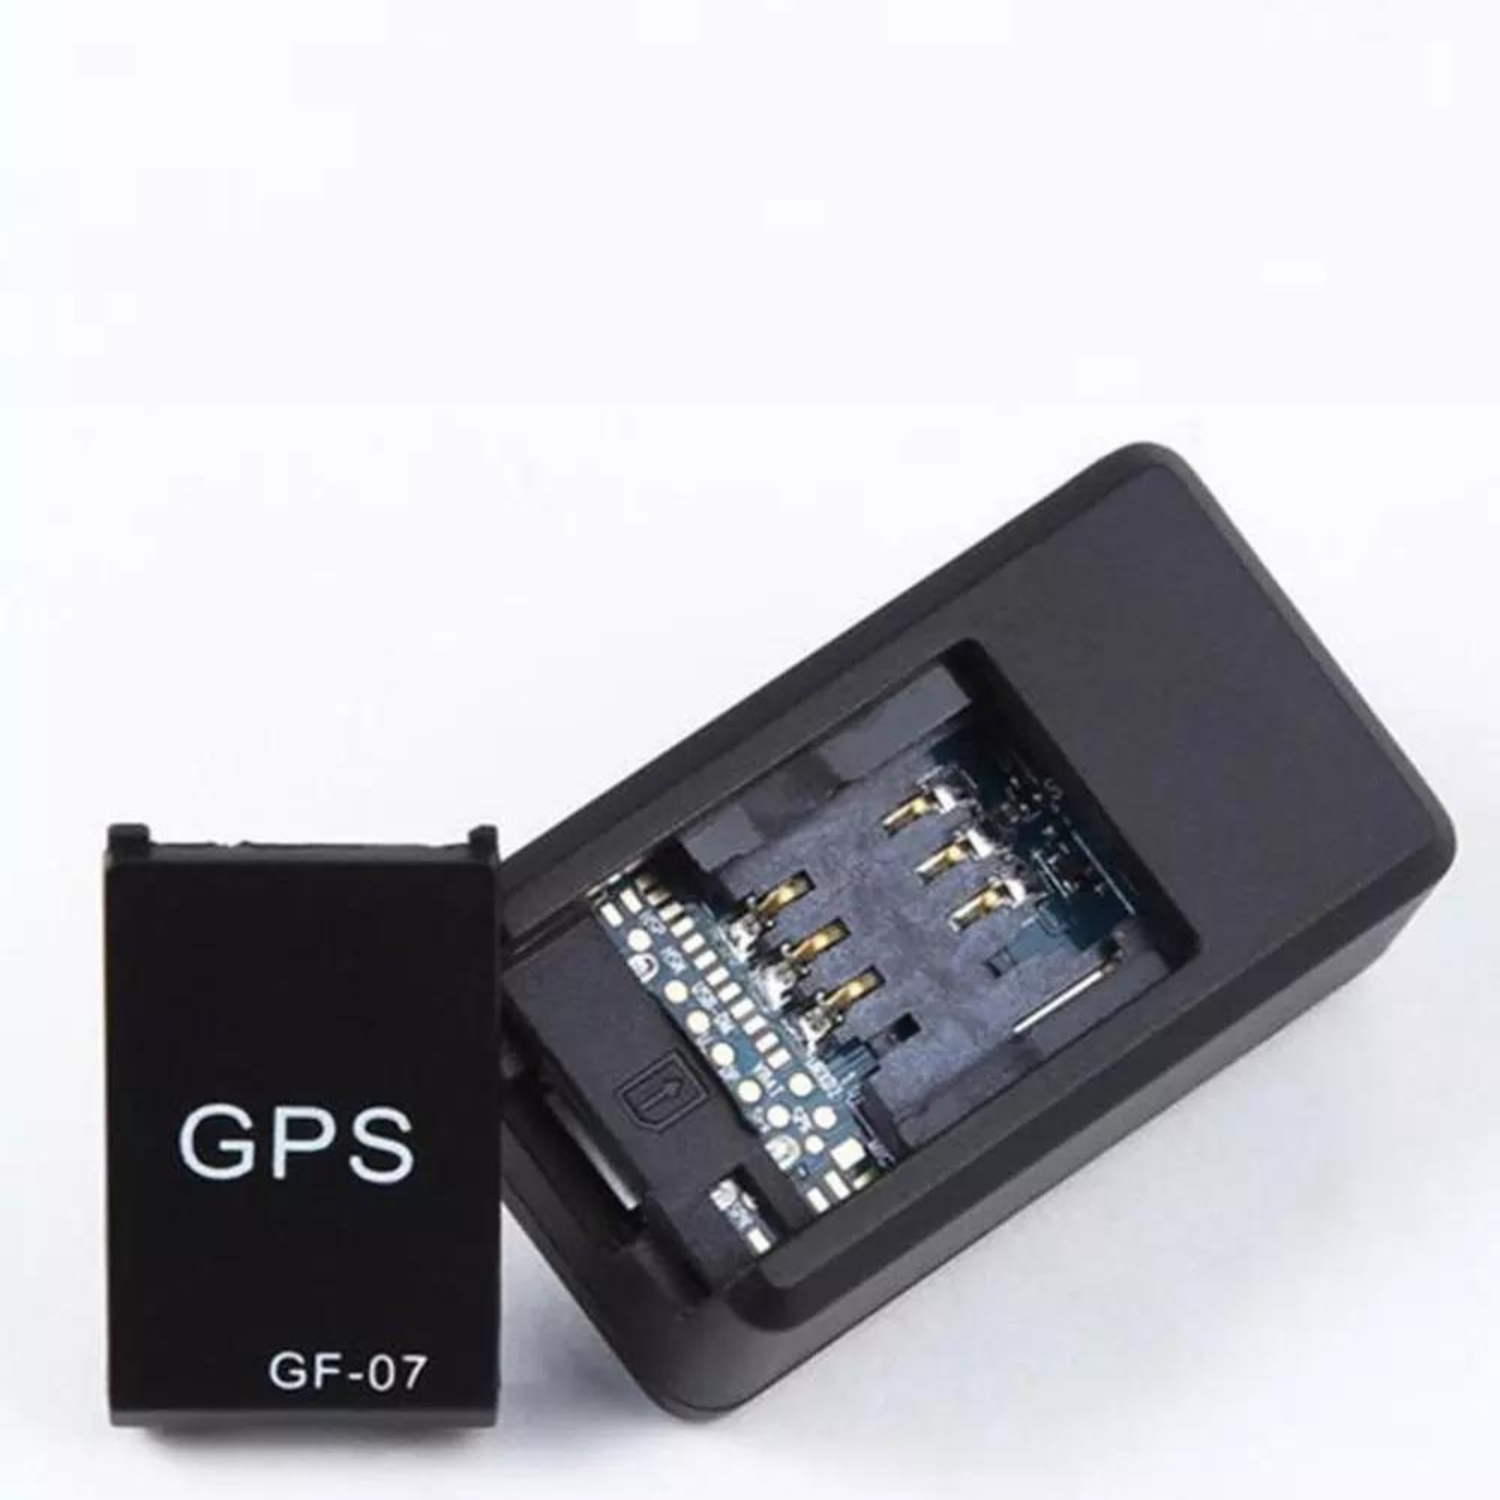 Magnetic Mini Worldwide Gps Tracker